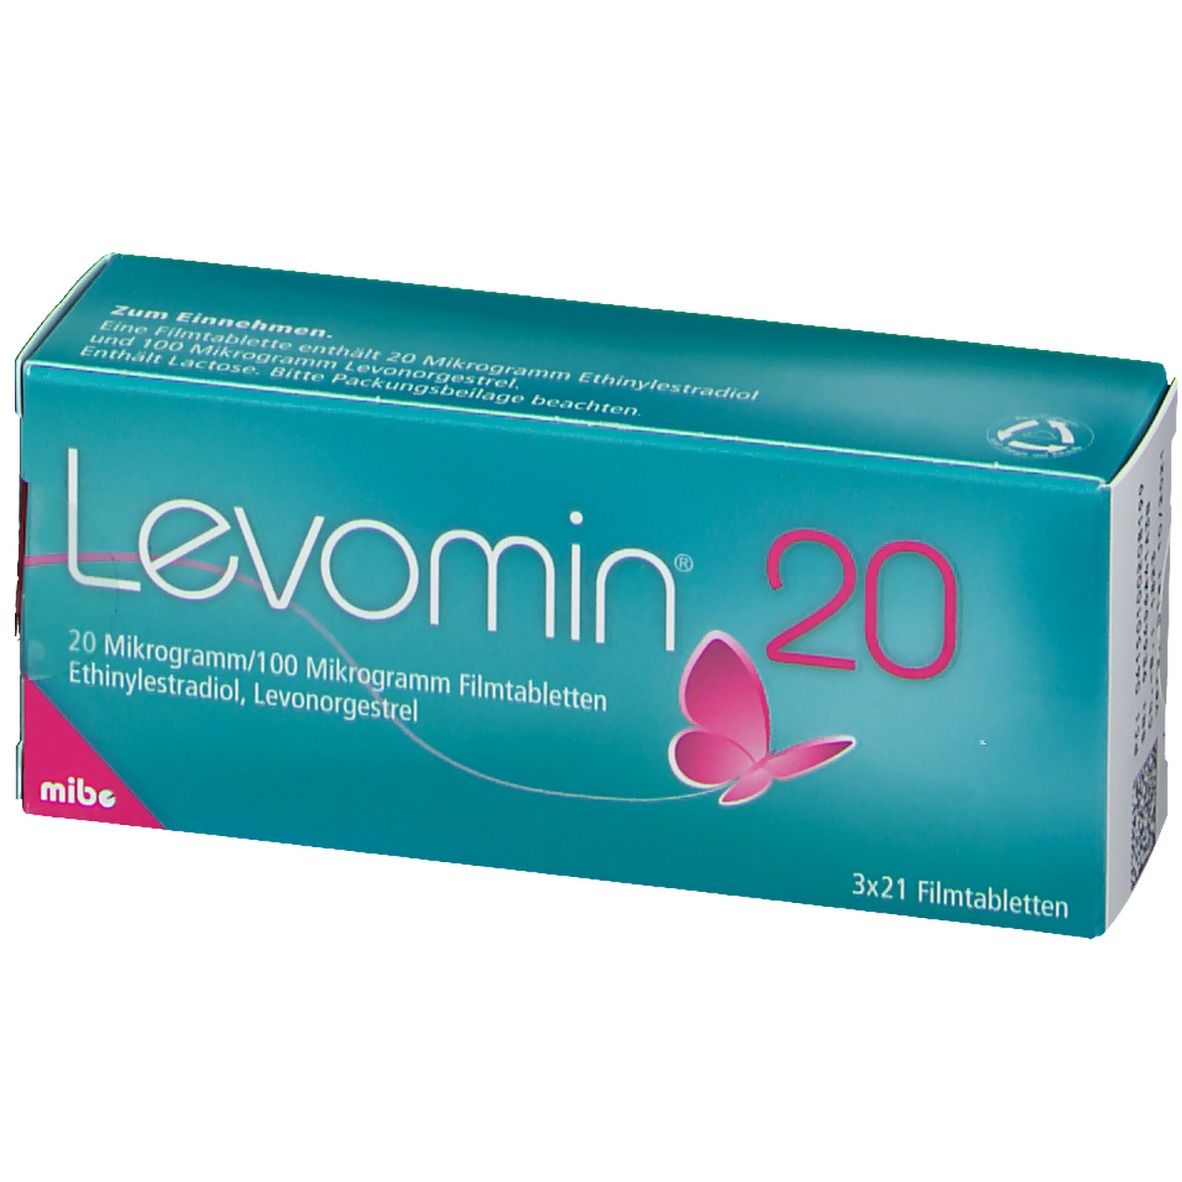 Levomin 20 20 µg/100 µg